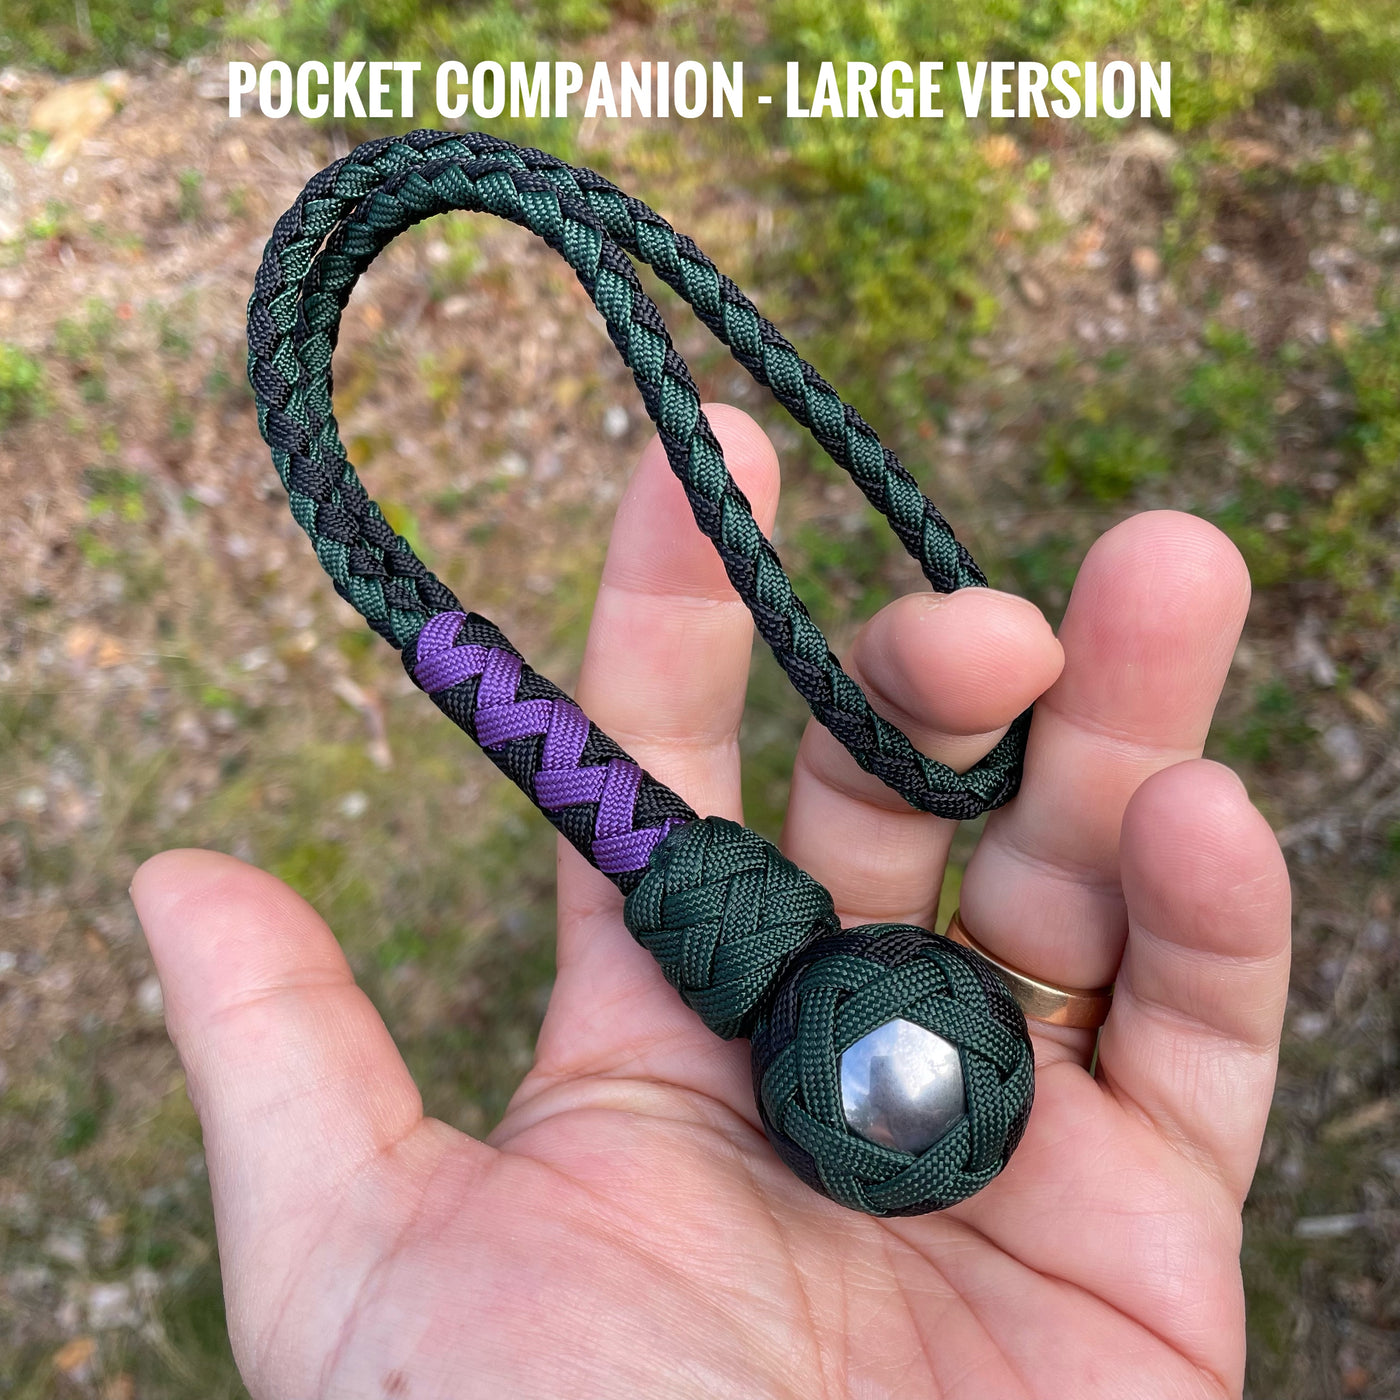 The Pocket Companion